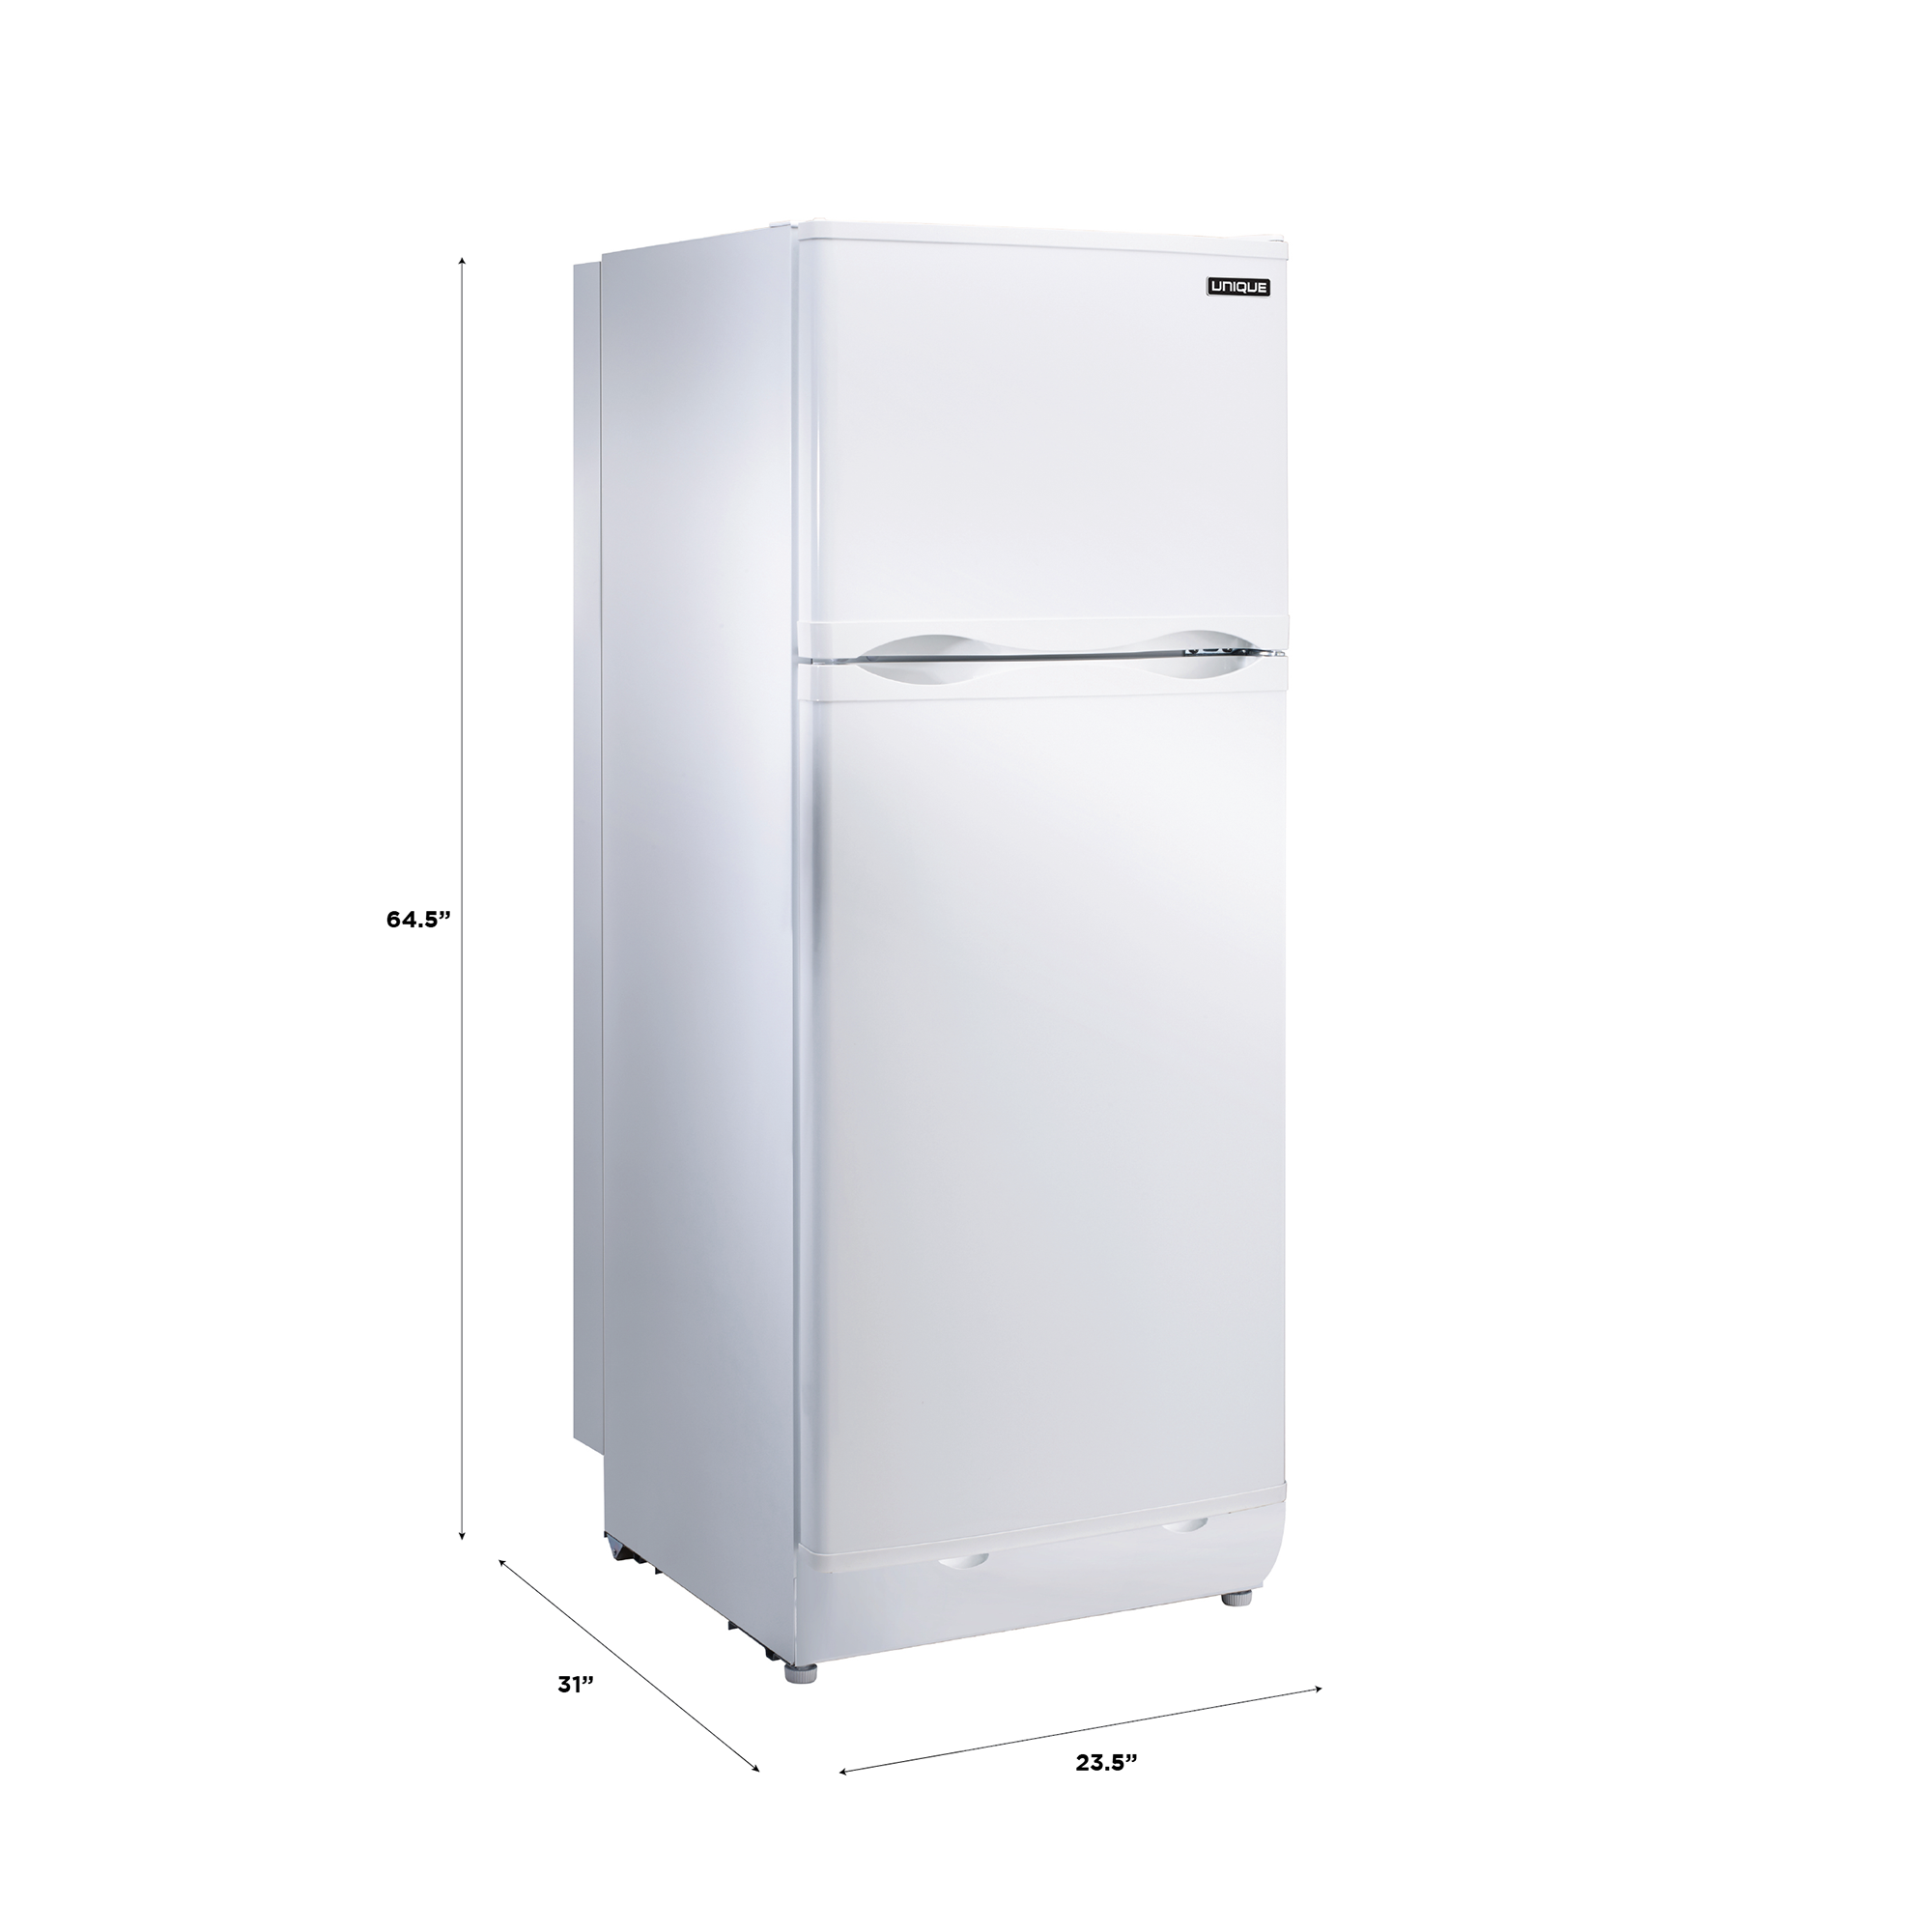 Unique Appliances - 23.5 Inch 10 cu. ft Top Mount Refrigerator in White - UGP-10C DV W